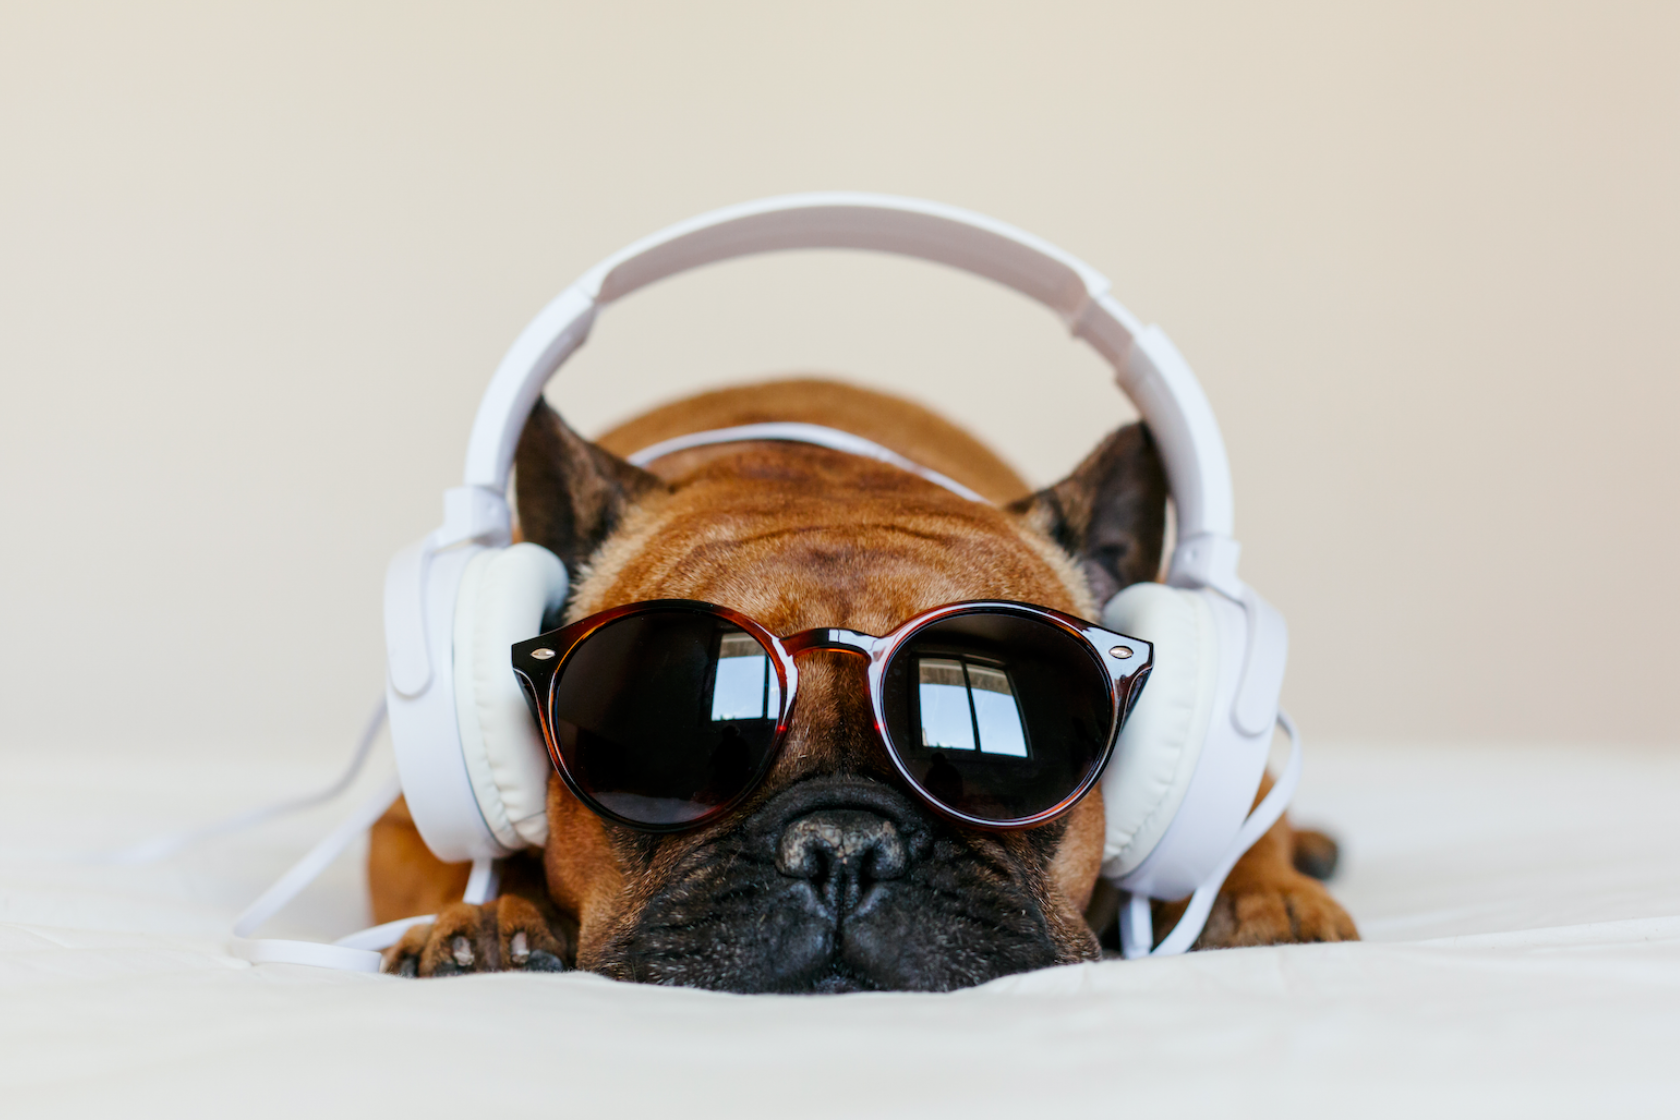 Dog wearing sunglasses and headphones